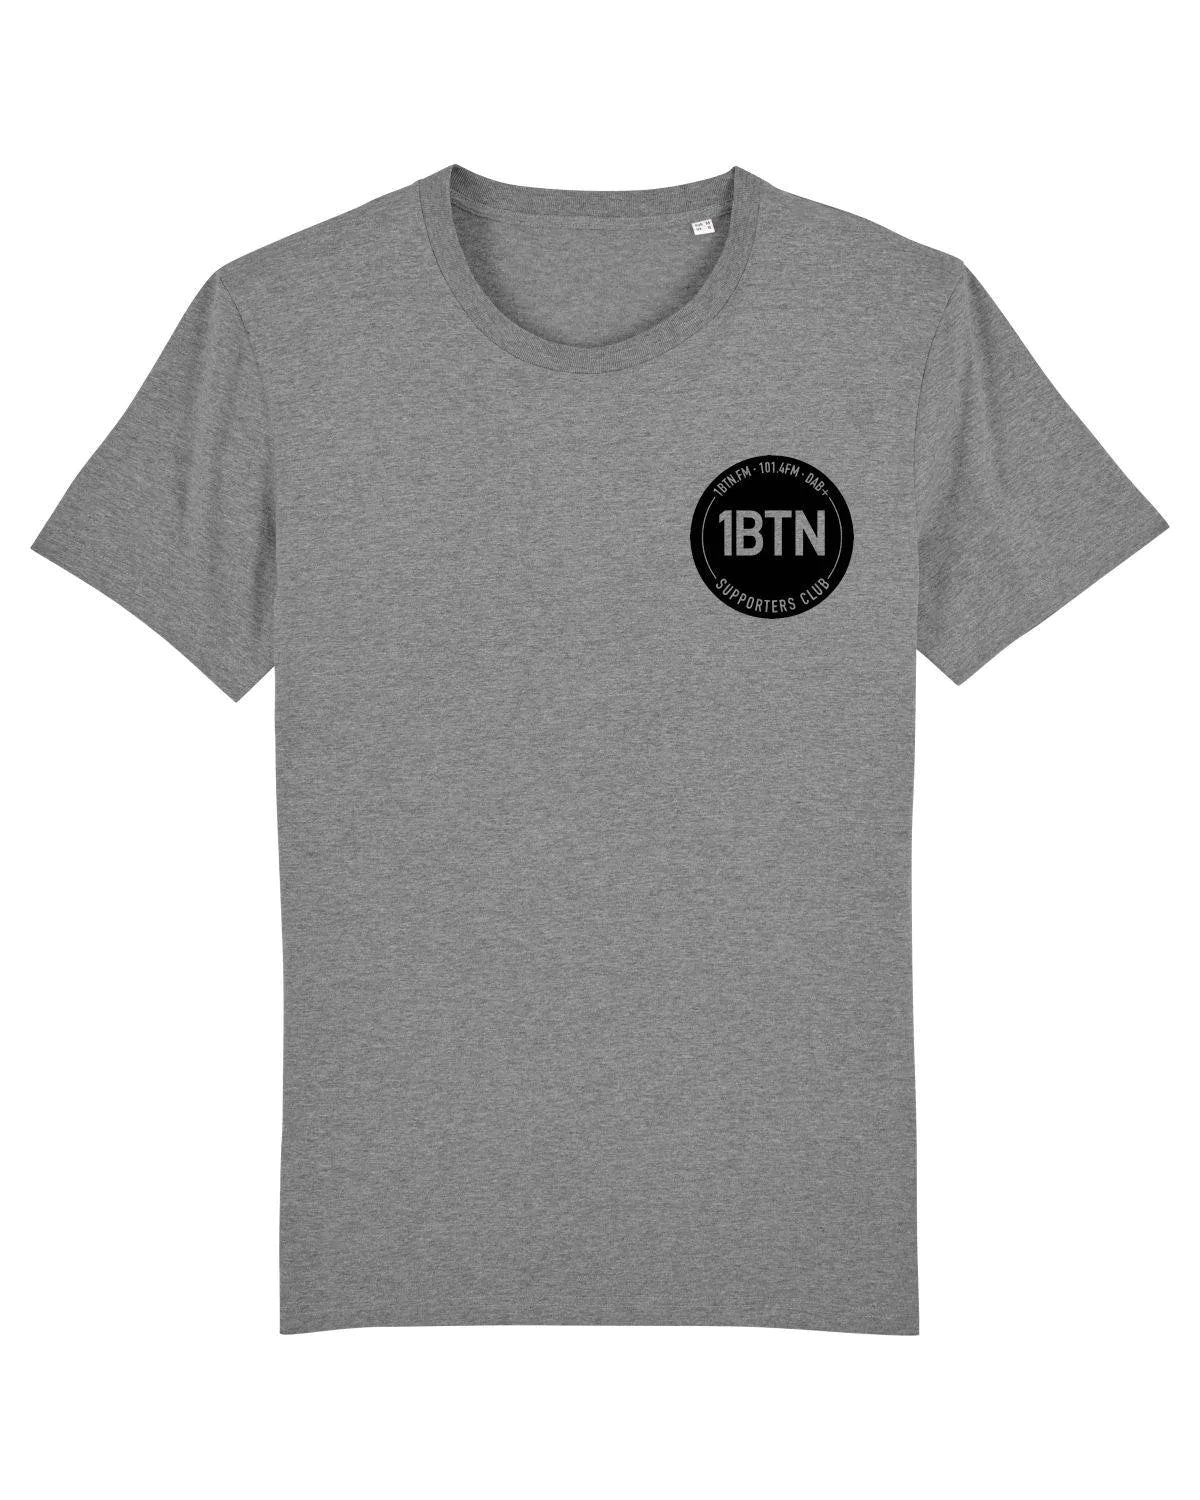 1BTN SUPPORTERS CLUB: T-Shirt Official Merchandise of 1BTN.FM (5 Colour Options) - SOUND IS COLOUR